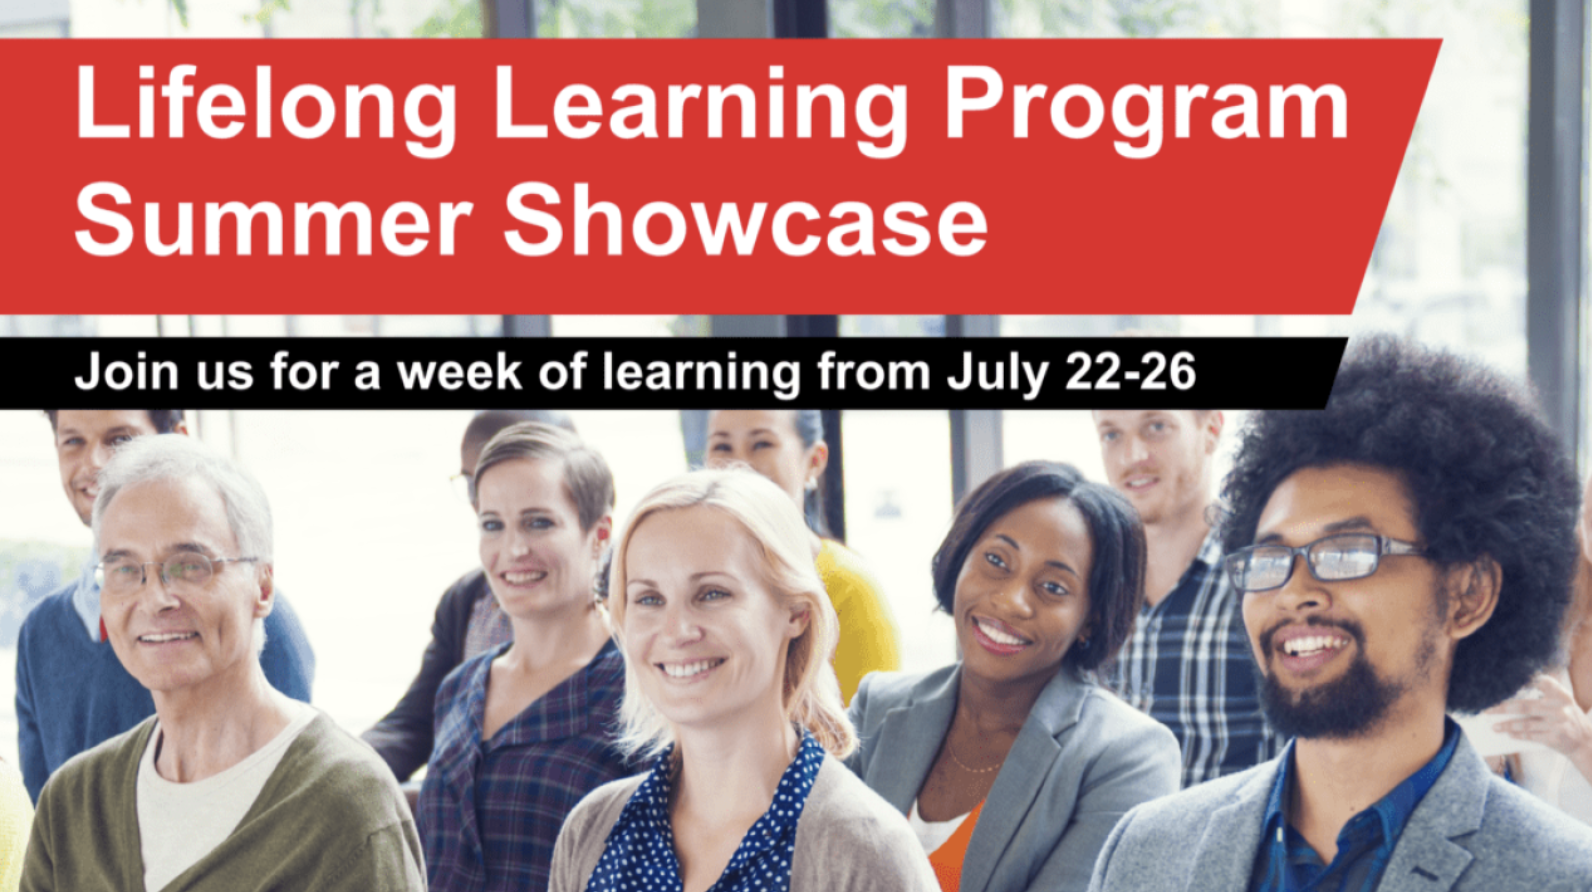 Lifelong Learning Program Summer Showcase, July 22-26